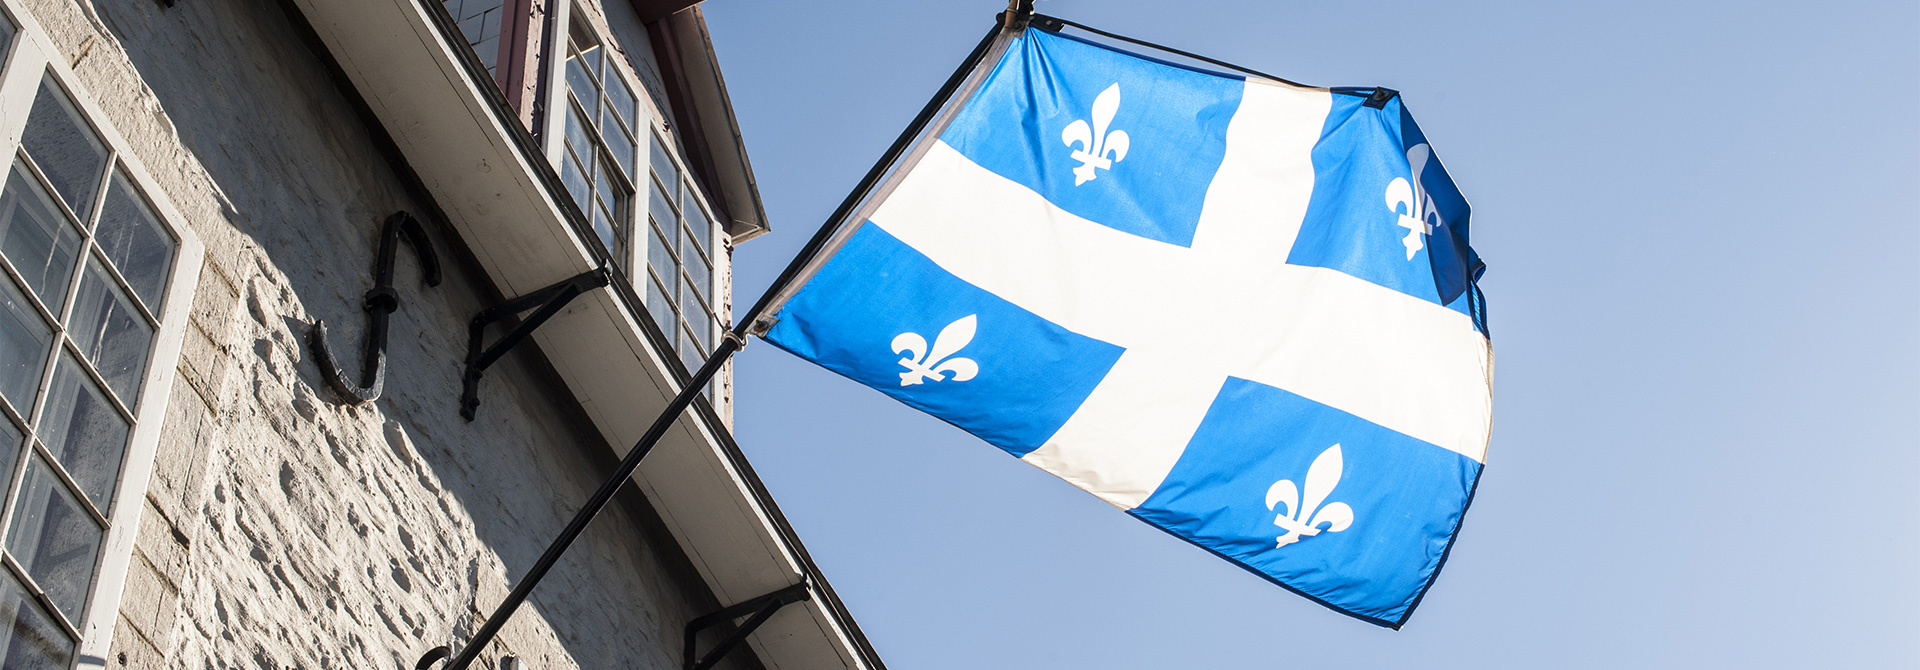 Bulletin d’information 2017-3 du Québec